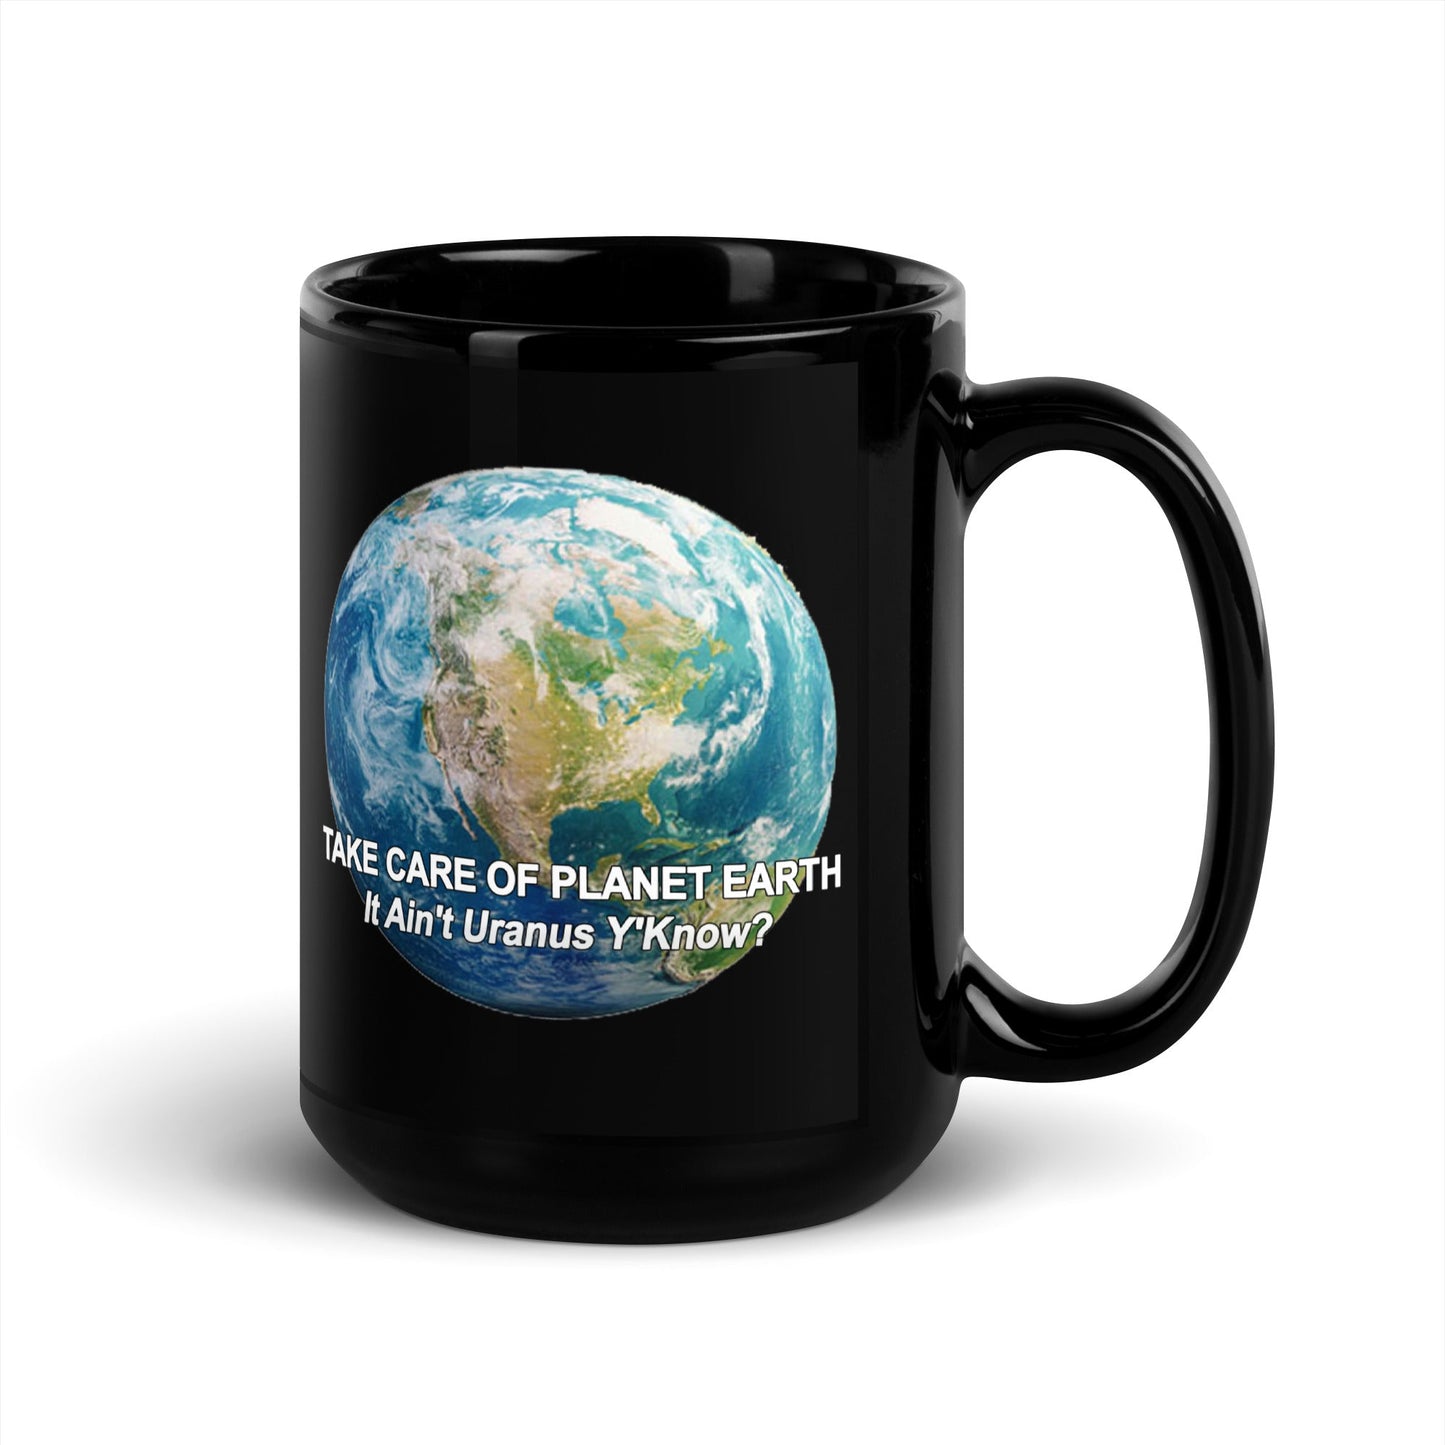 Take Care of Planet Earth. It's Not Uranus Y'Know - Black Ceramic Glossy Mug